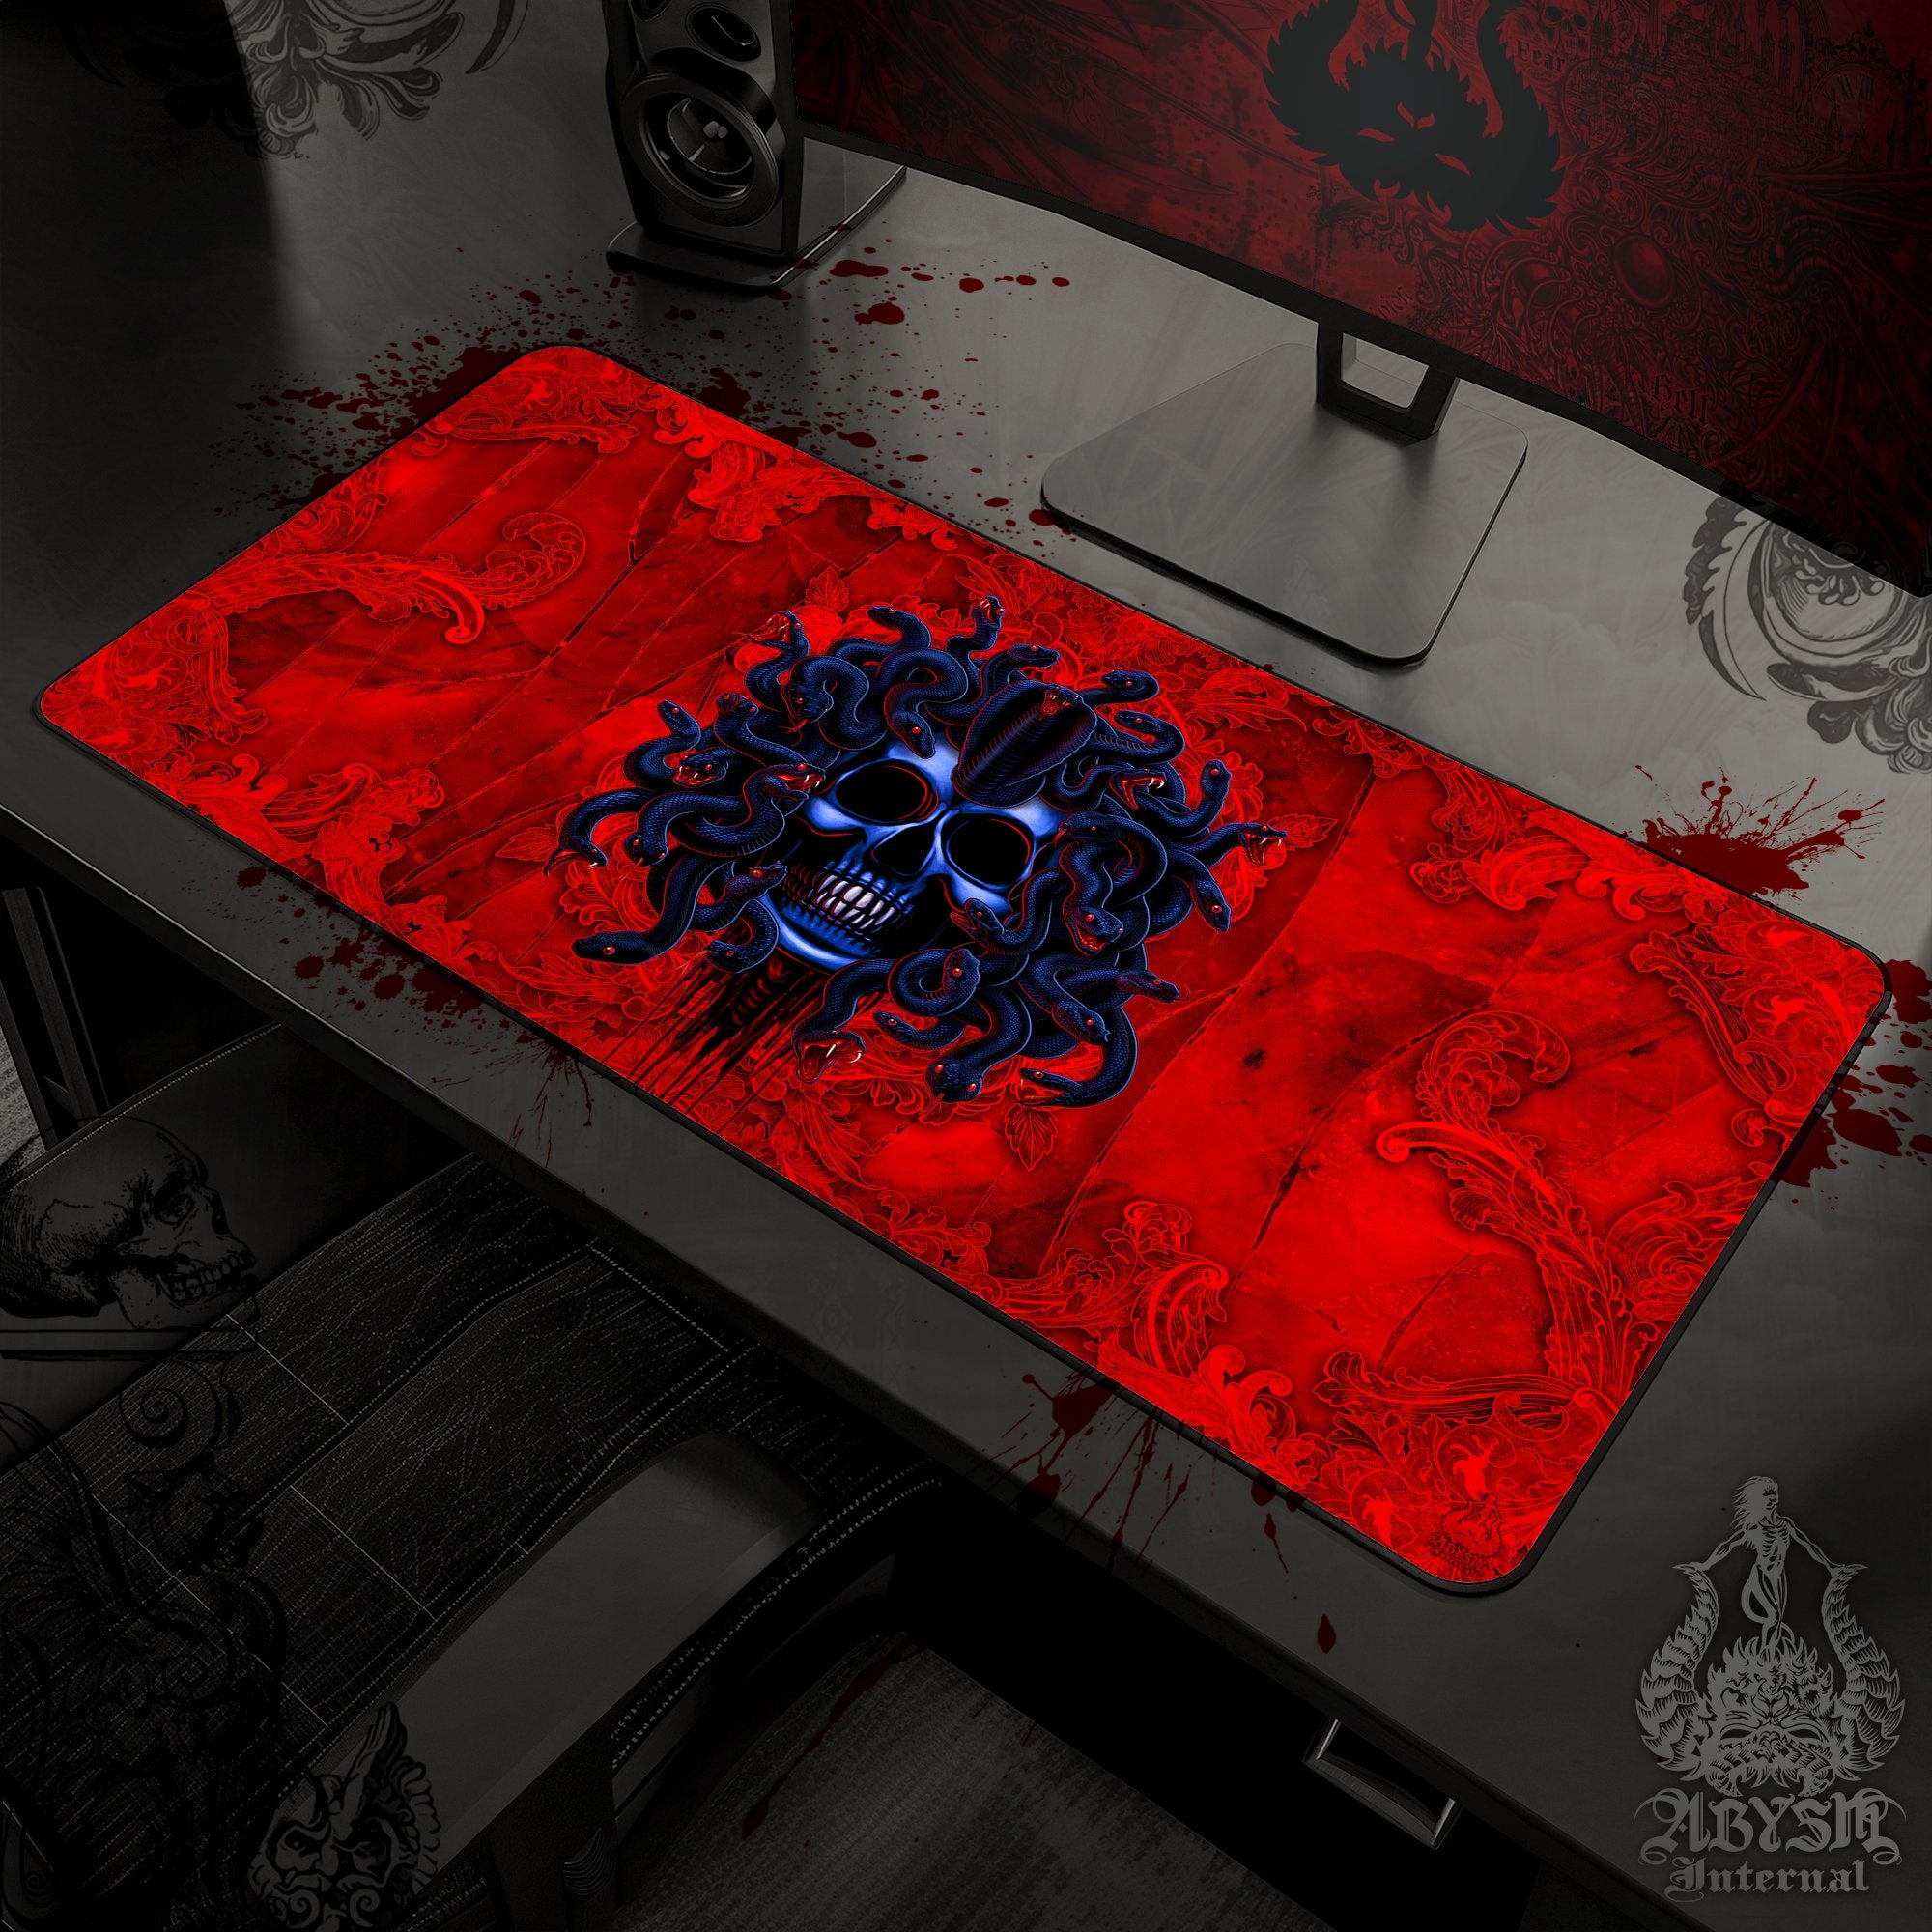 Horror Gaming Desk Mat, Medusa Mouse Pad, Skull Table Protector Cover, Halloween Workpad, Dark Fantasy Art Print - Bad Neon, 3 Options - Abysm Internal